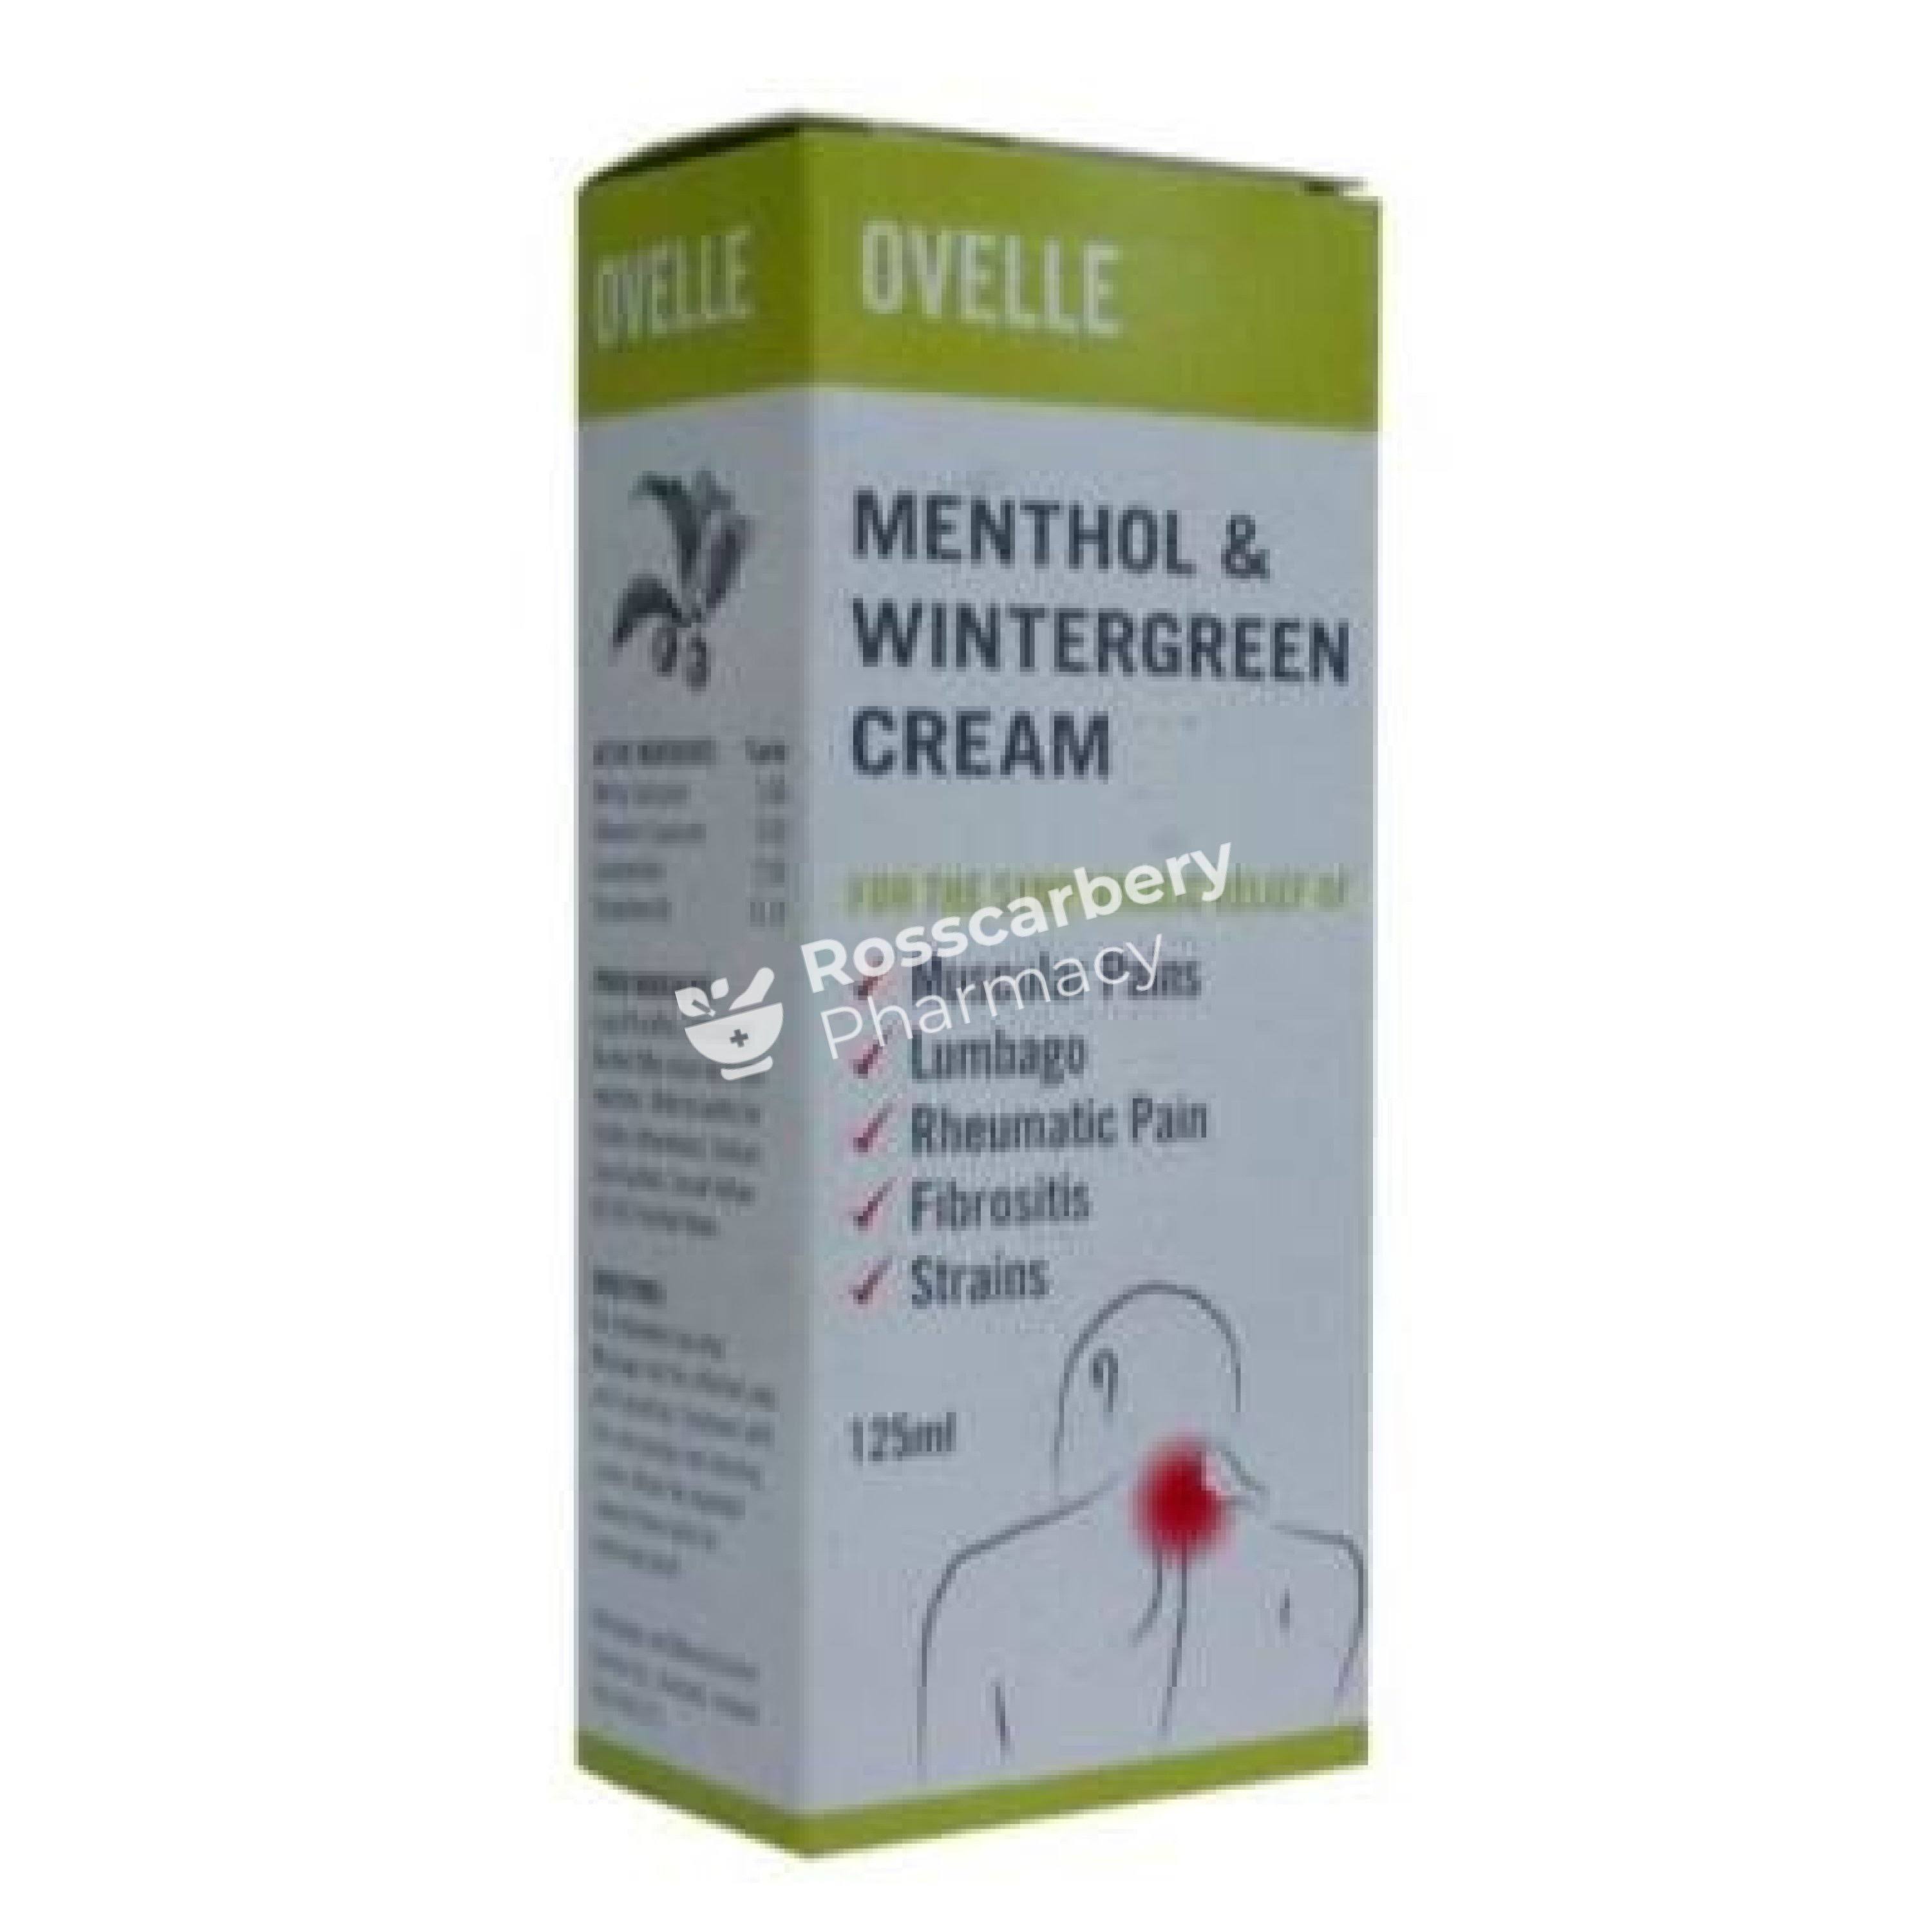 Ovelle Menthol & Wintergreen Cream 125ml